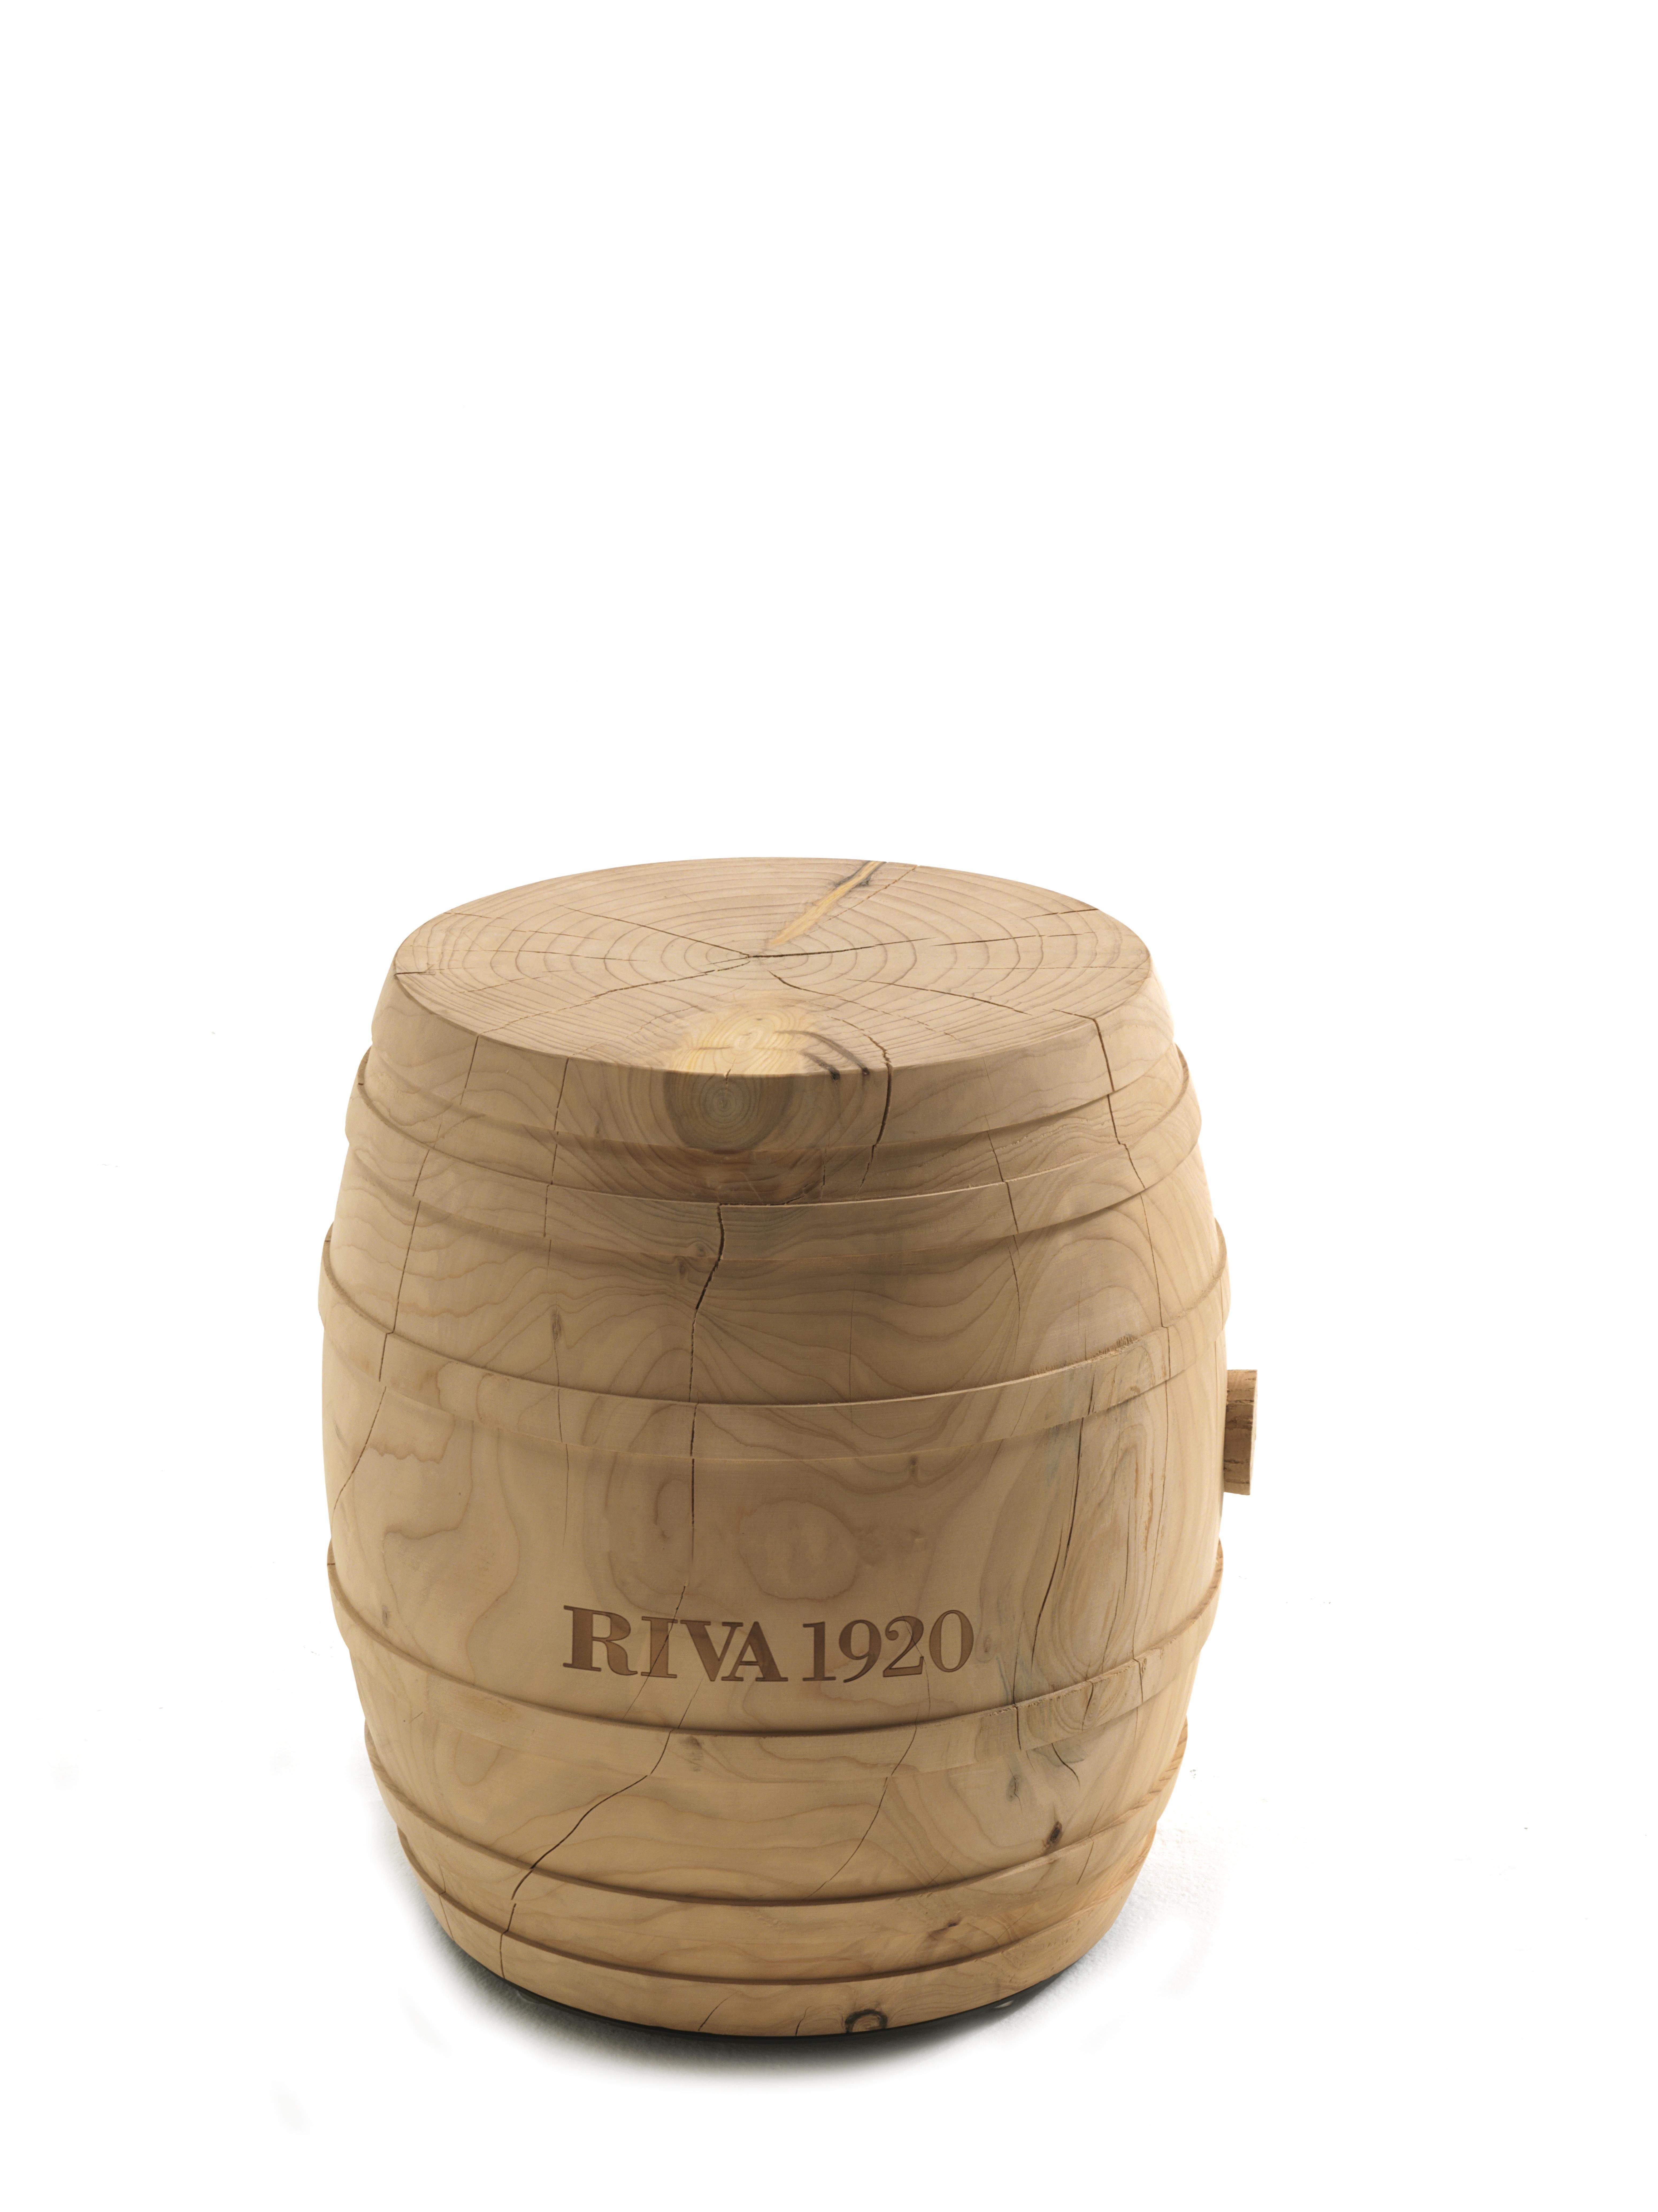 Botte Stool C.R.&S. Riva1920 Contemporary Natural Cedar Made in Italy Riva1920